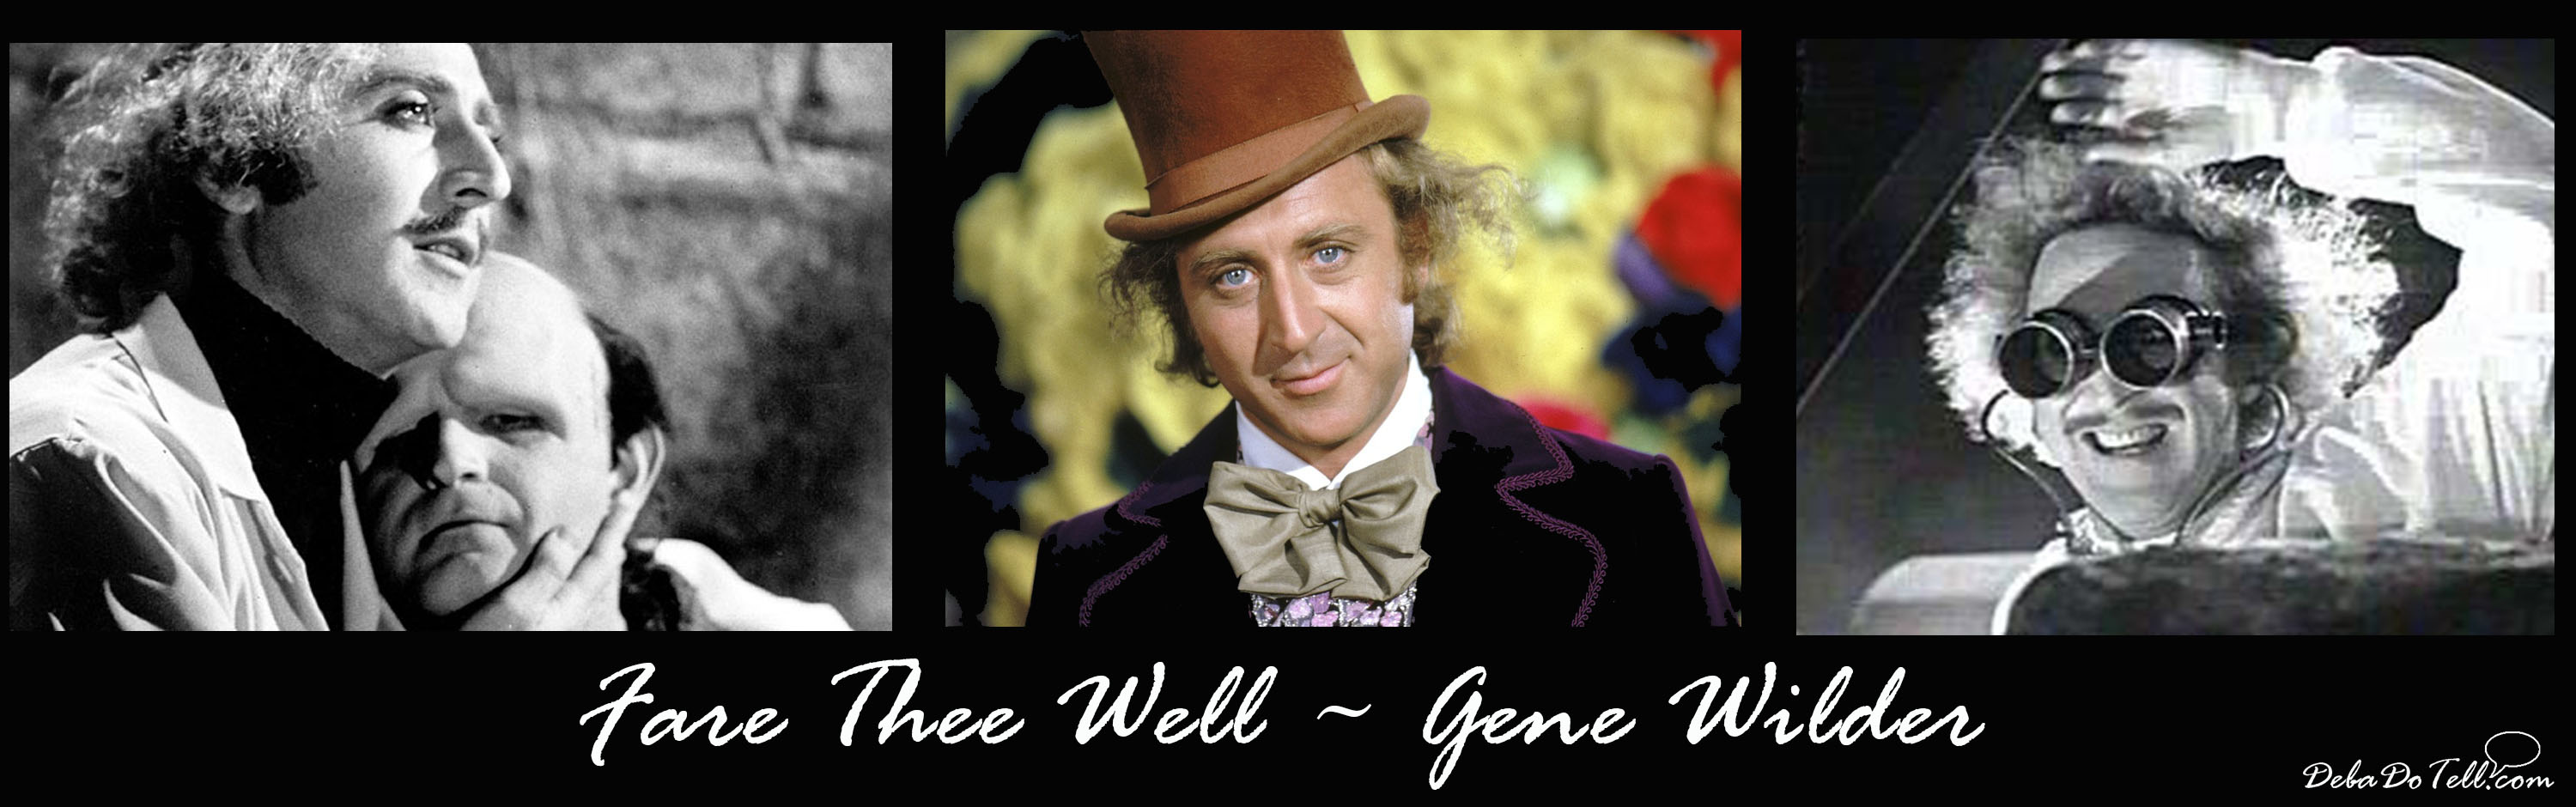 Actor Gene Wilder as Willy Wonka in Willy Wonka